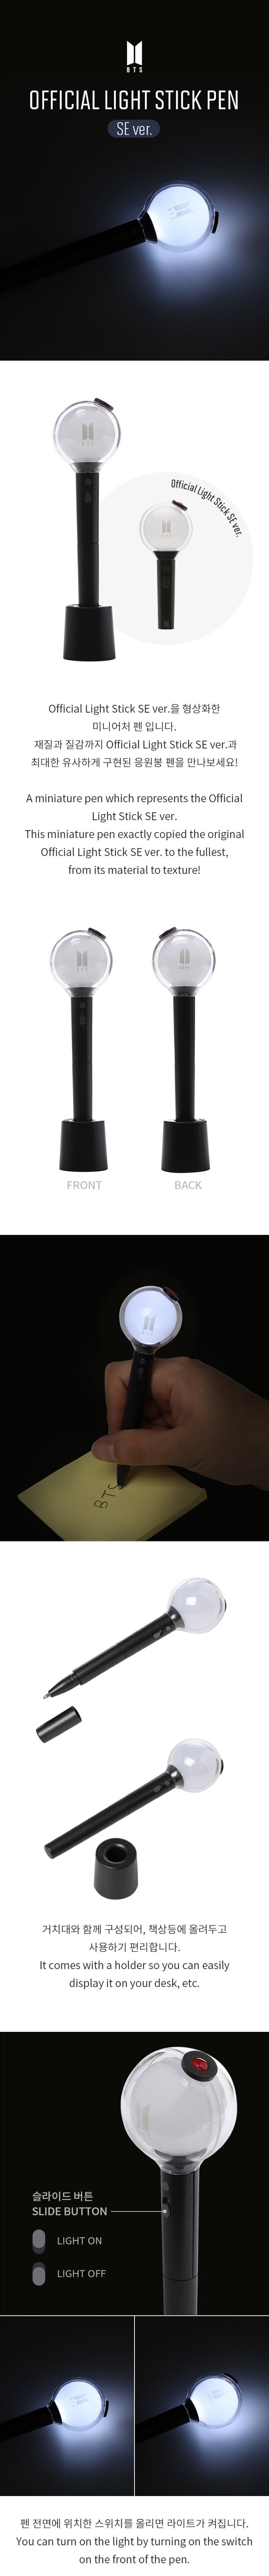 BTS 公式 Lightstick Pen SE Ver.